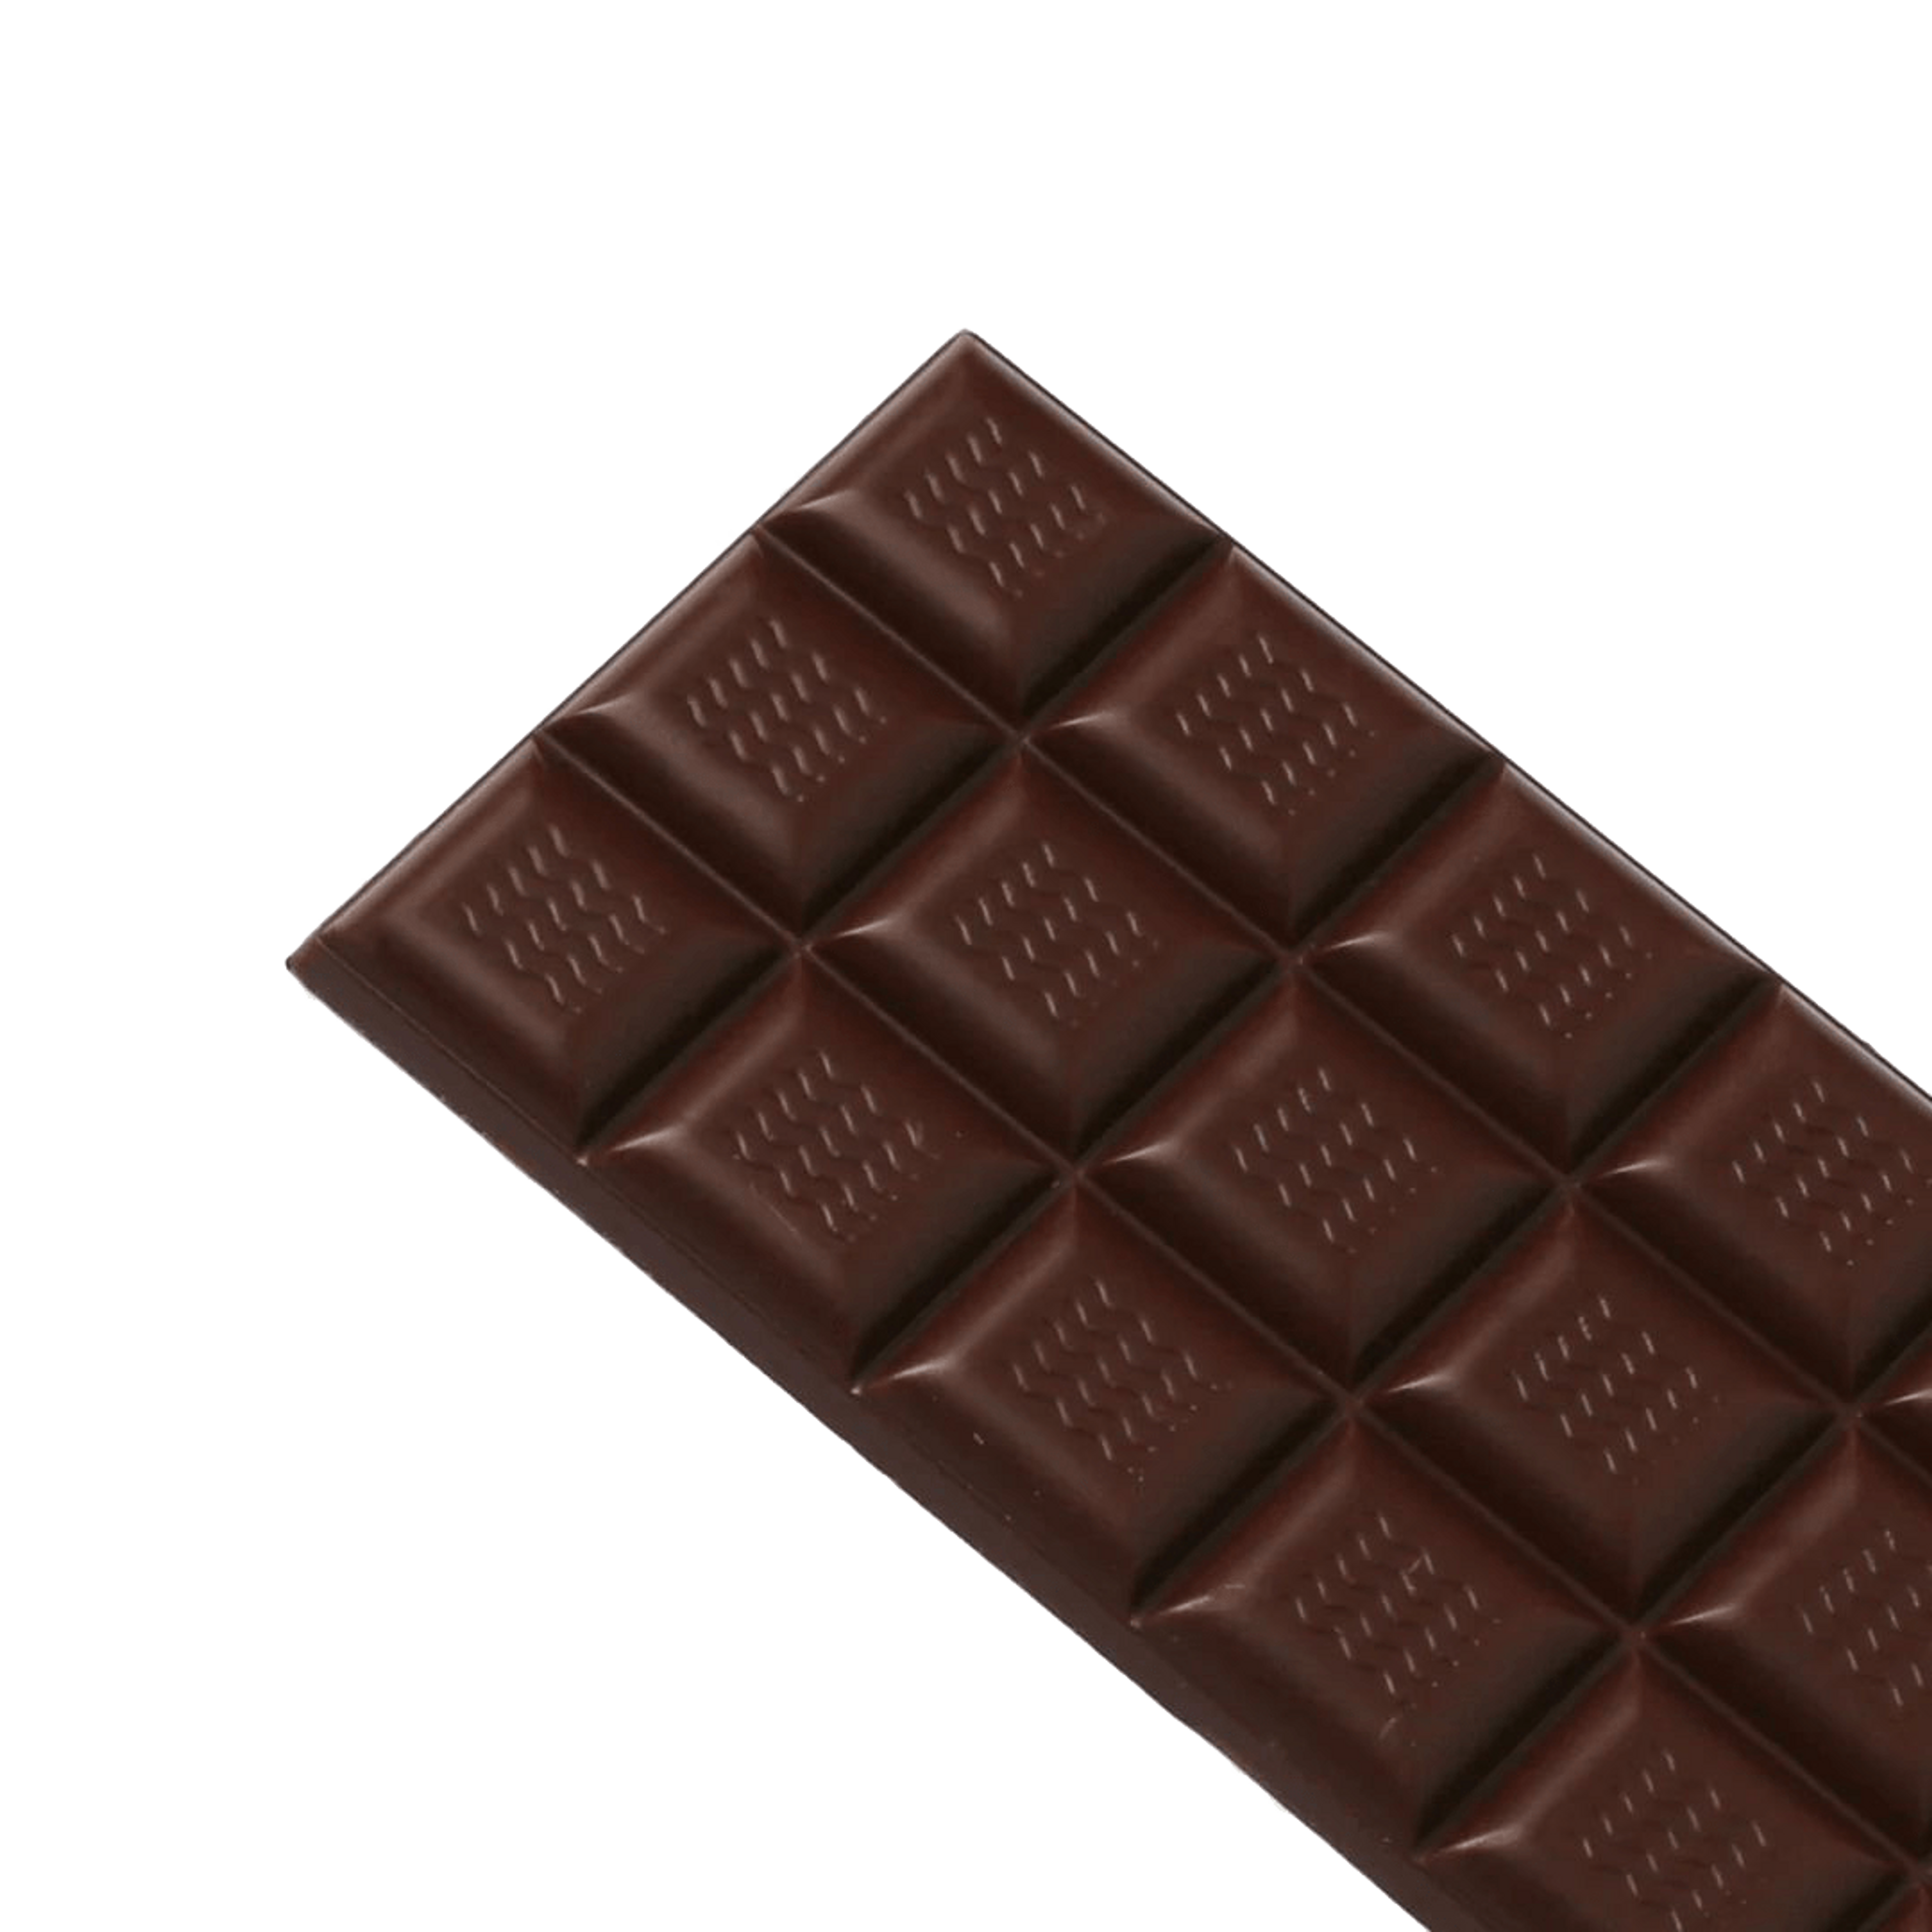 Costa Esmeraldas, Ecuador 2020 70% Batch 2 Single-Origin Chocolate Bar